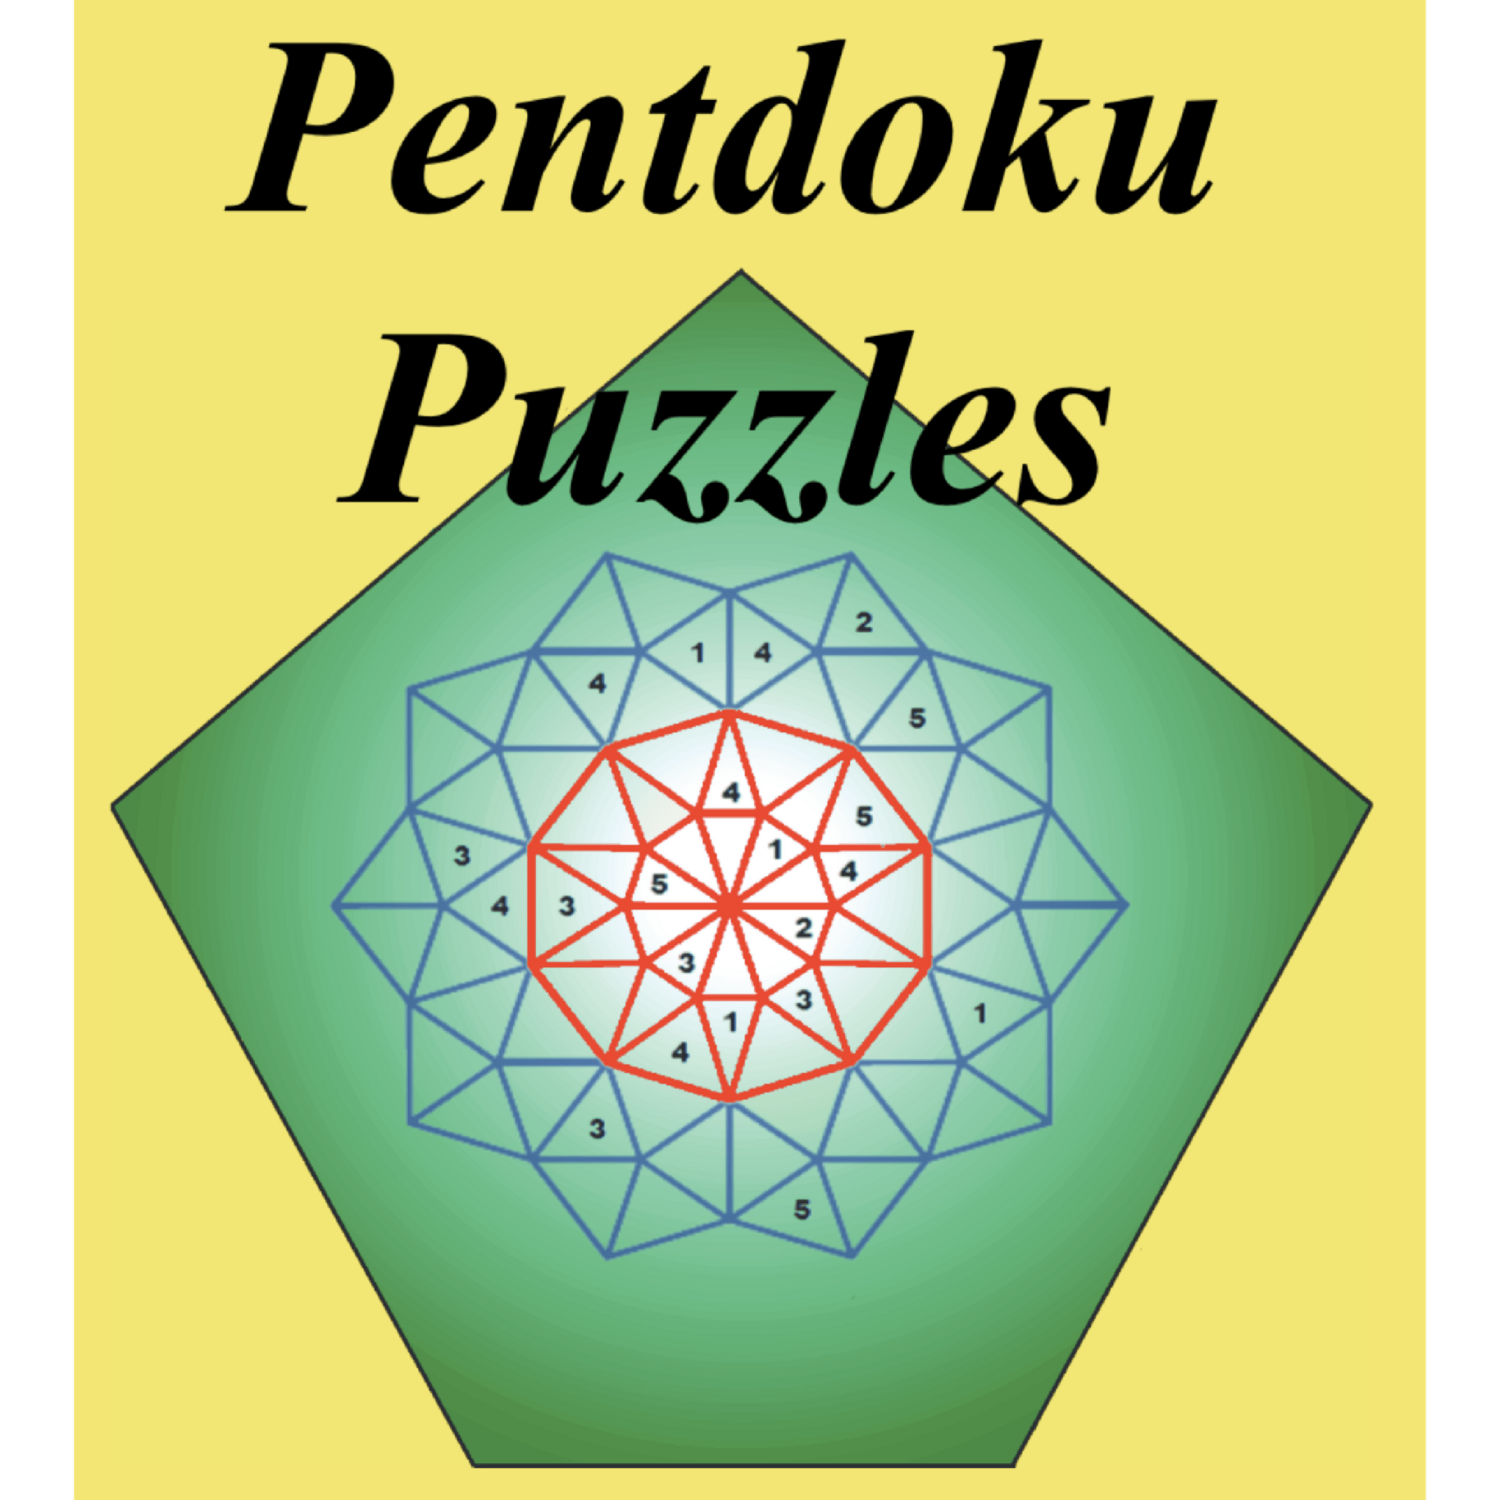 Book of Pentdoku Puzzles Vol 2